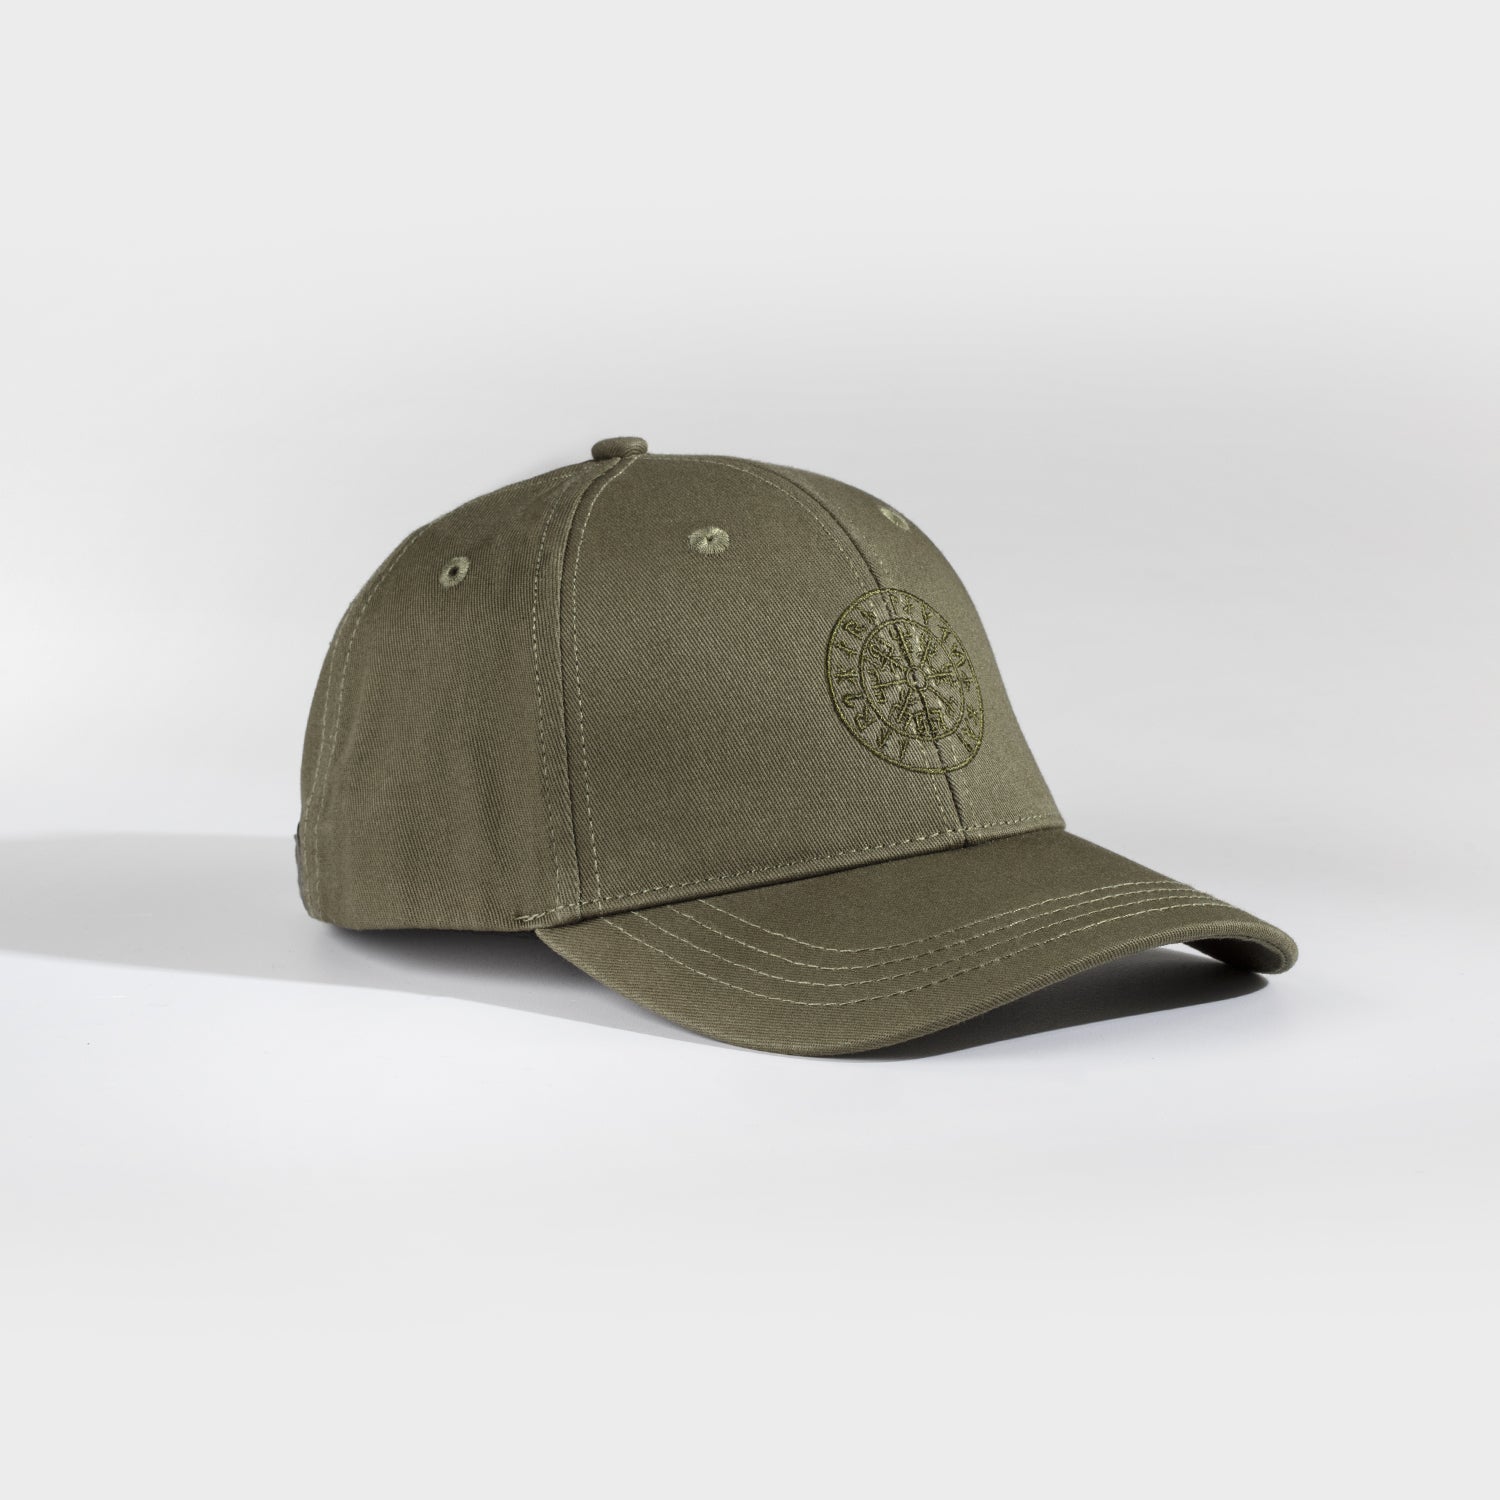 Vegvisir cap - Dusty green